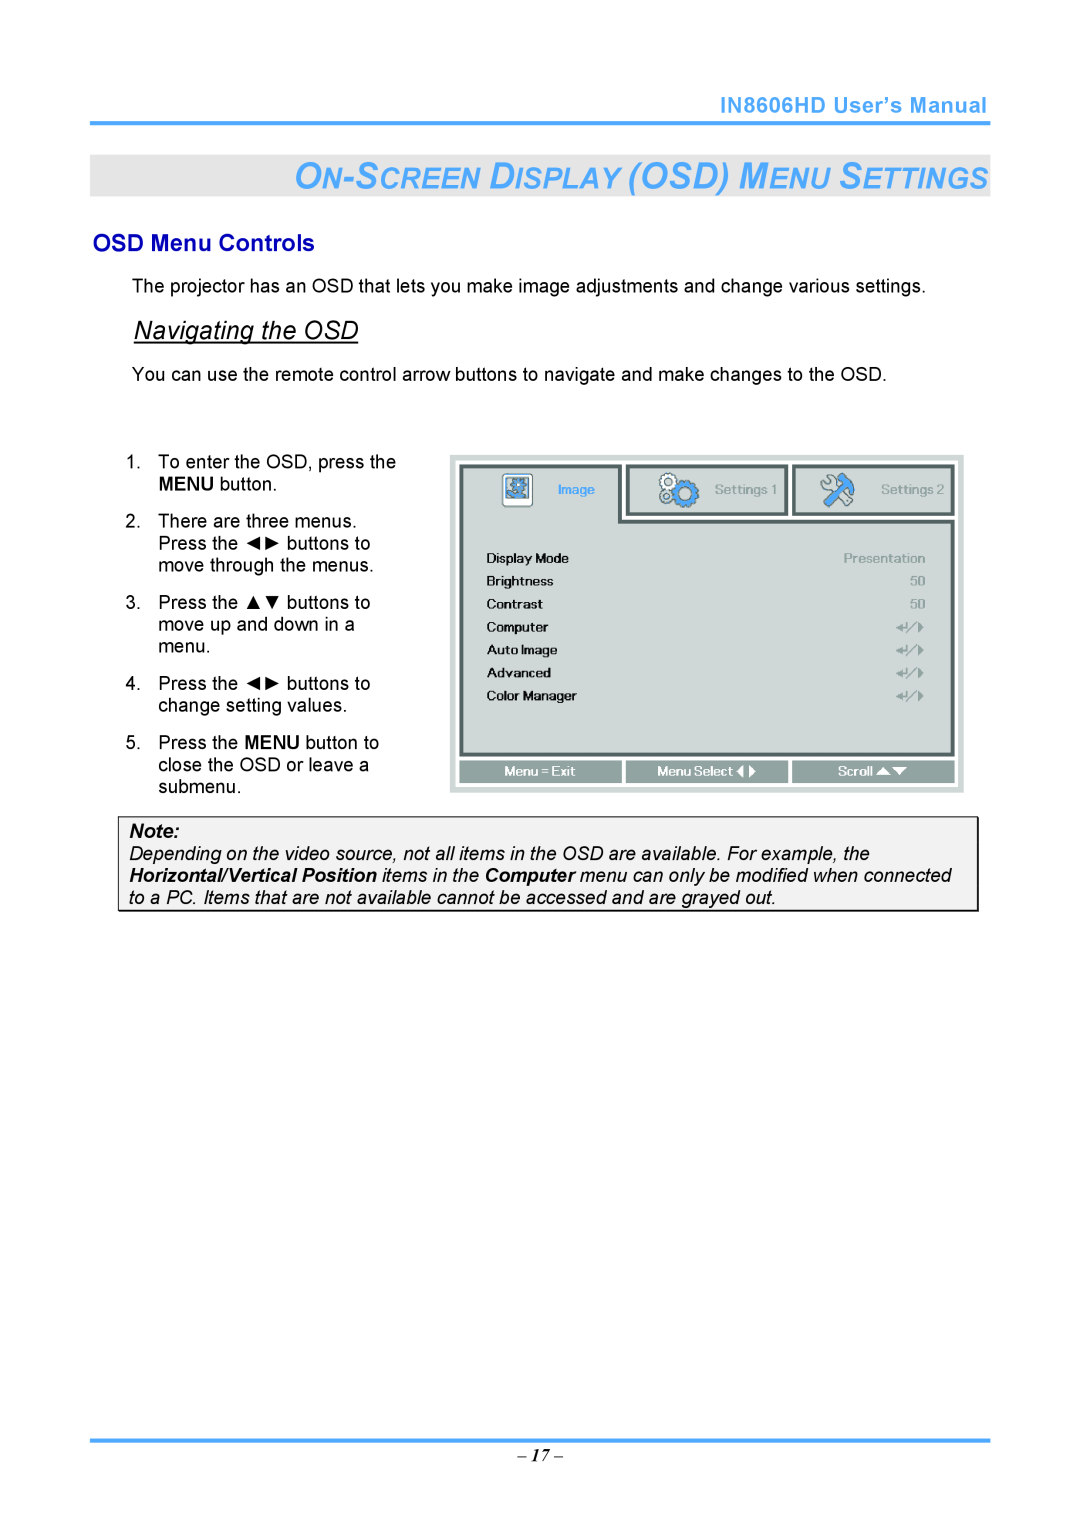 InFocus IN8606HD manual On-Screen Display Osd Menu Settings, Navigating the OSD, OSD Menu Controls 